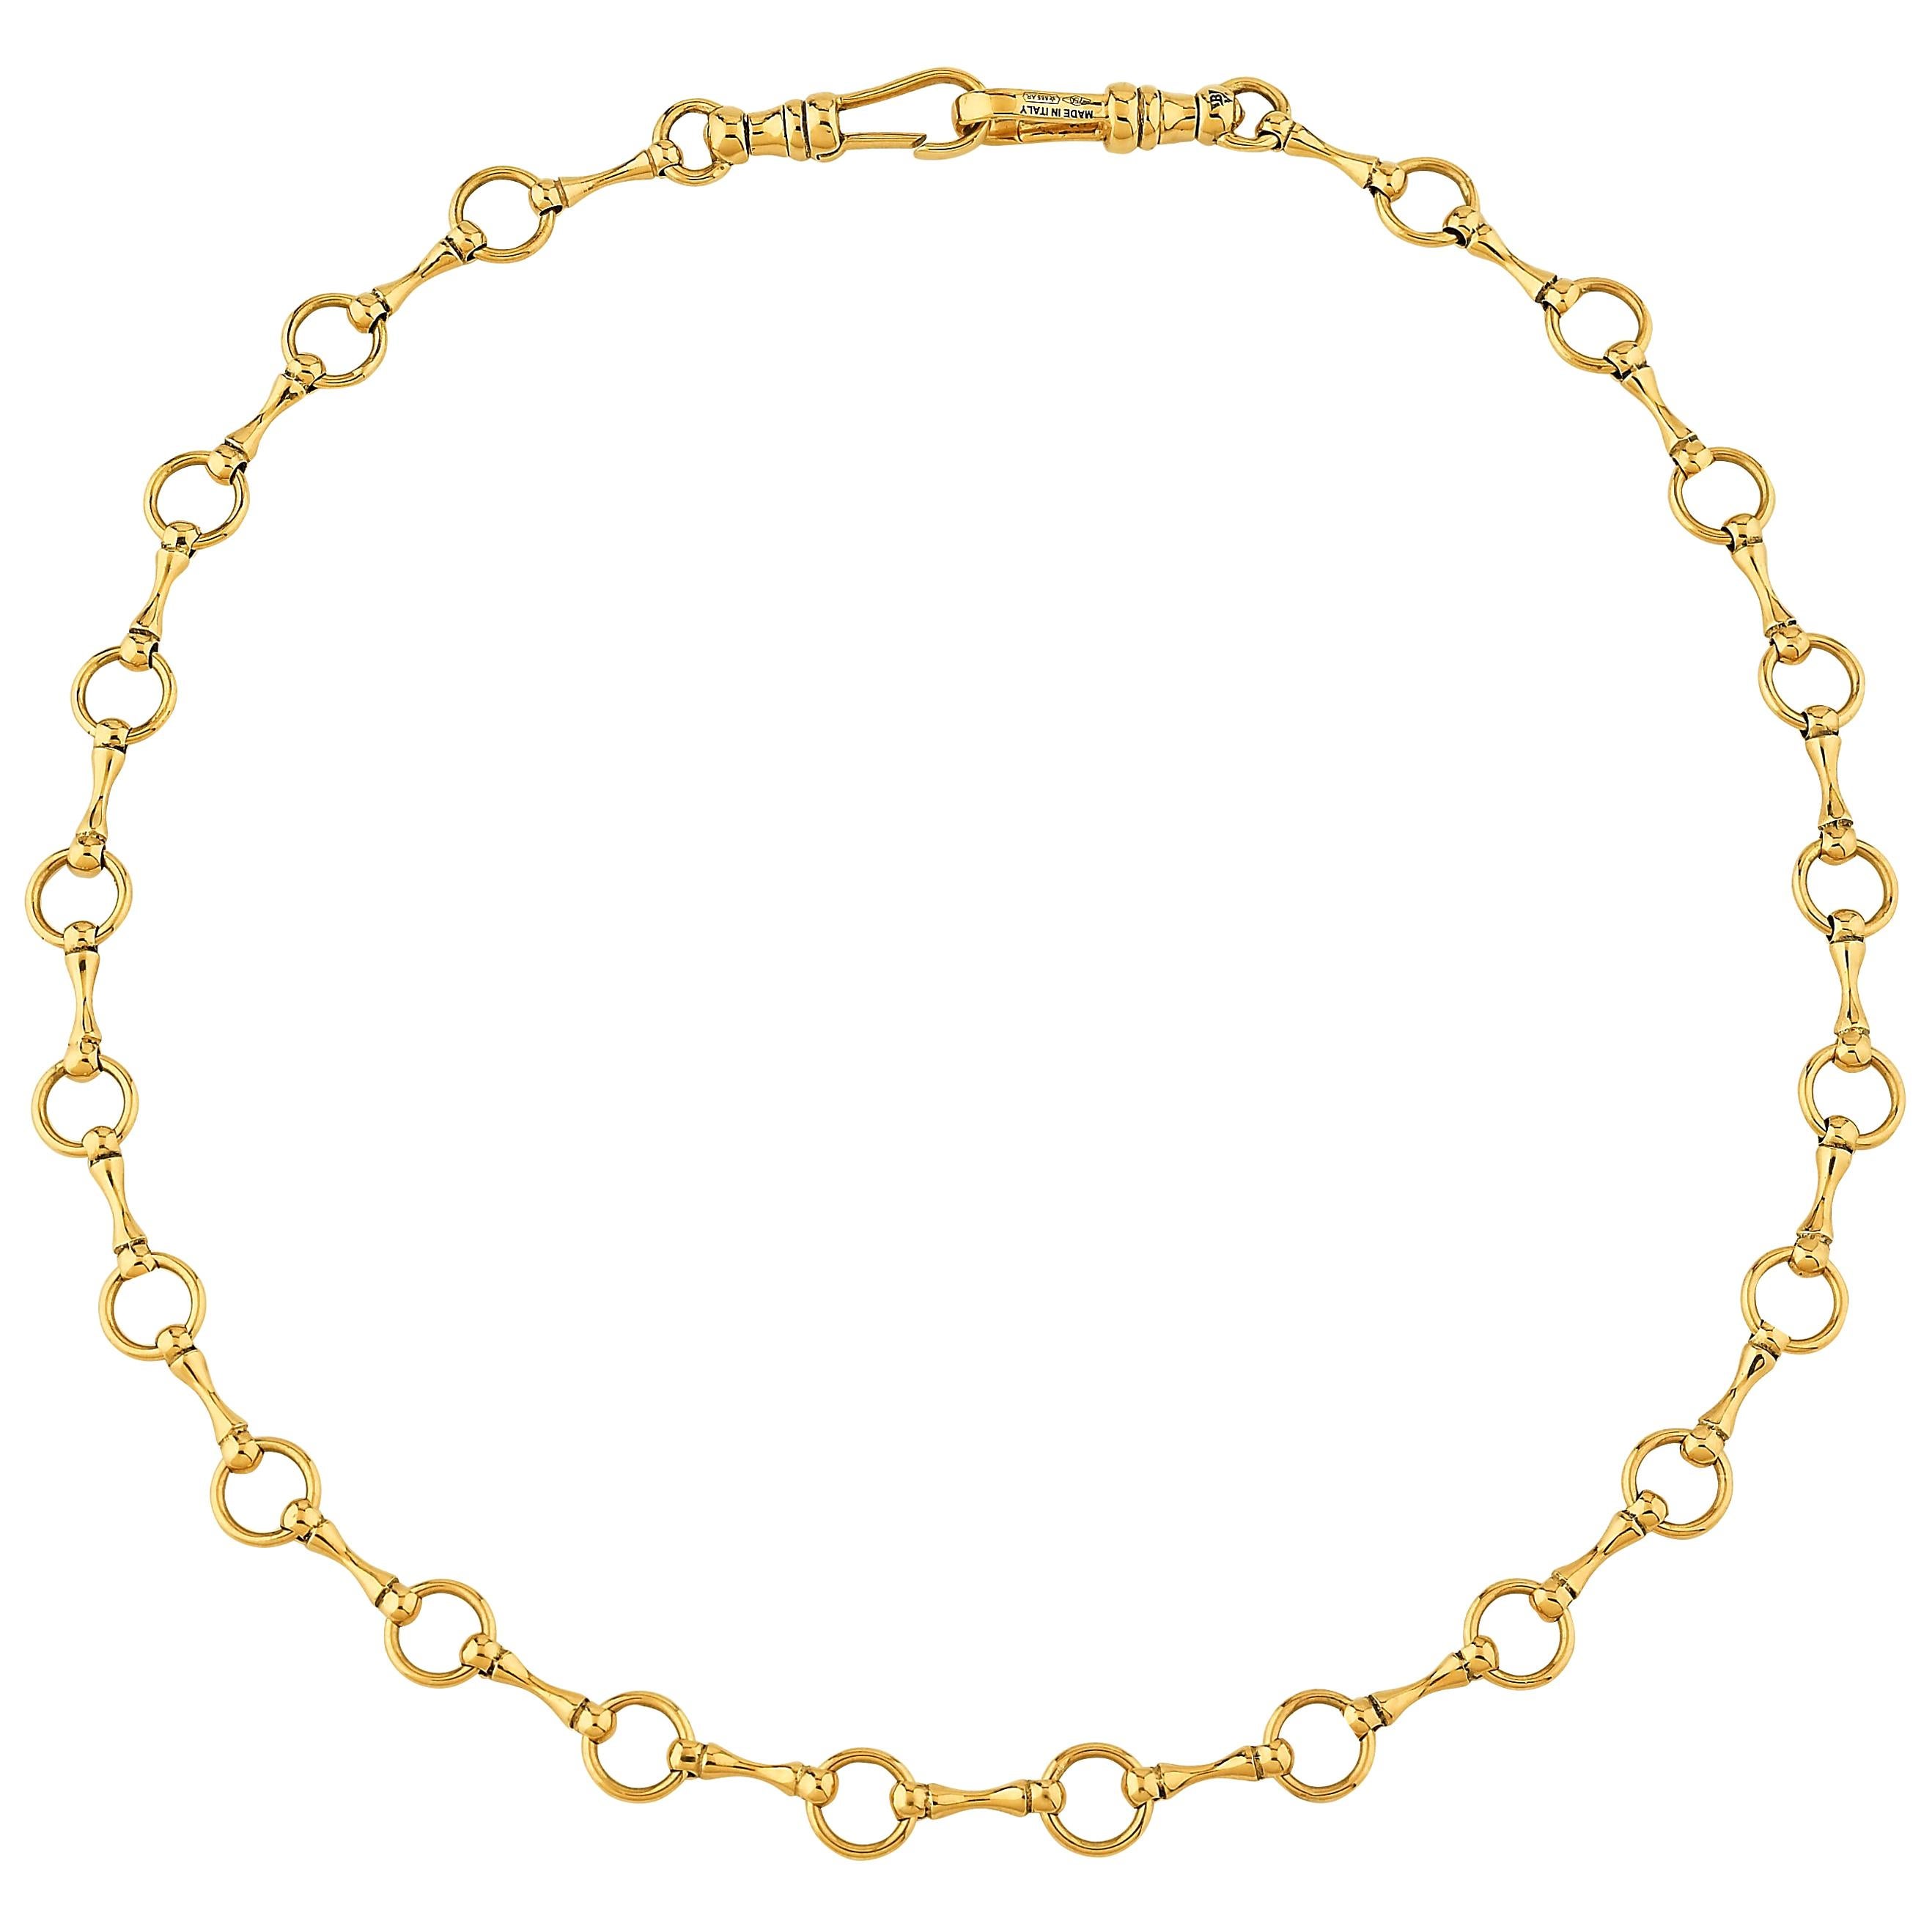 Betony Vernon "O'Ring Signature Chain Necklace" Necklace 18 Karat Gold